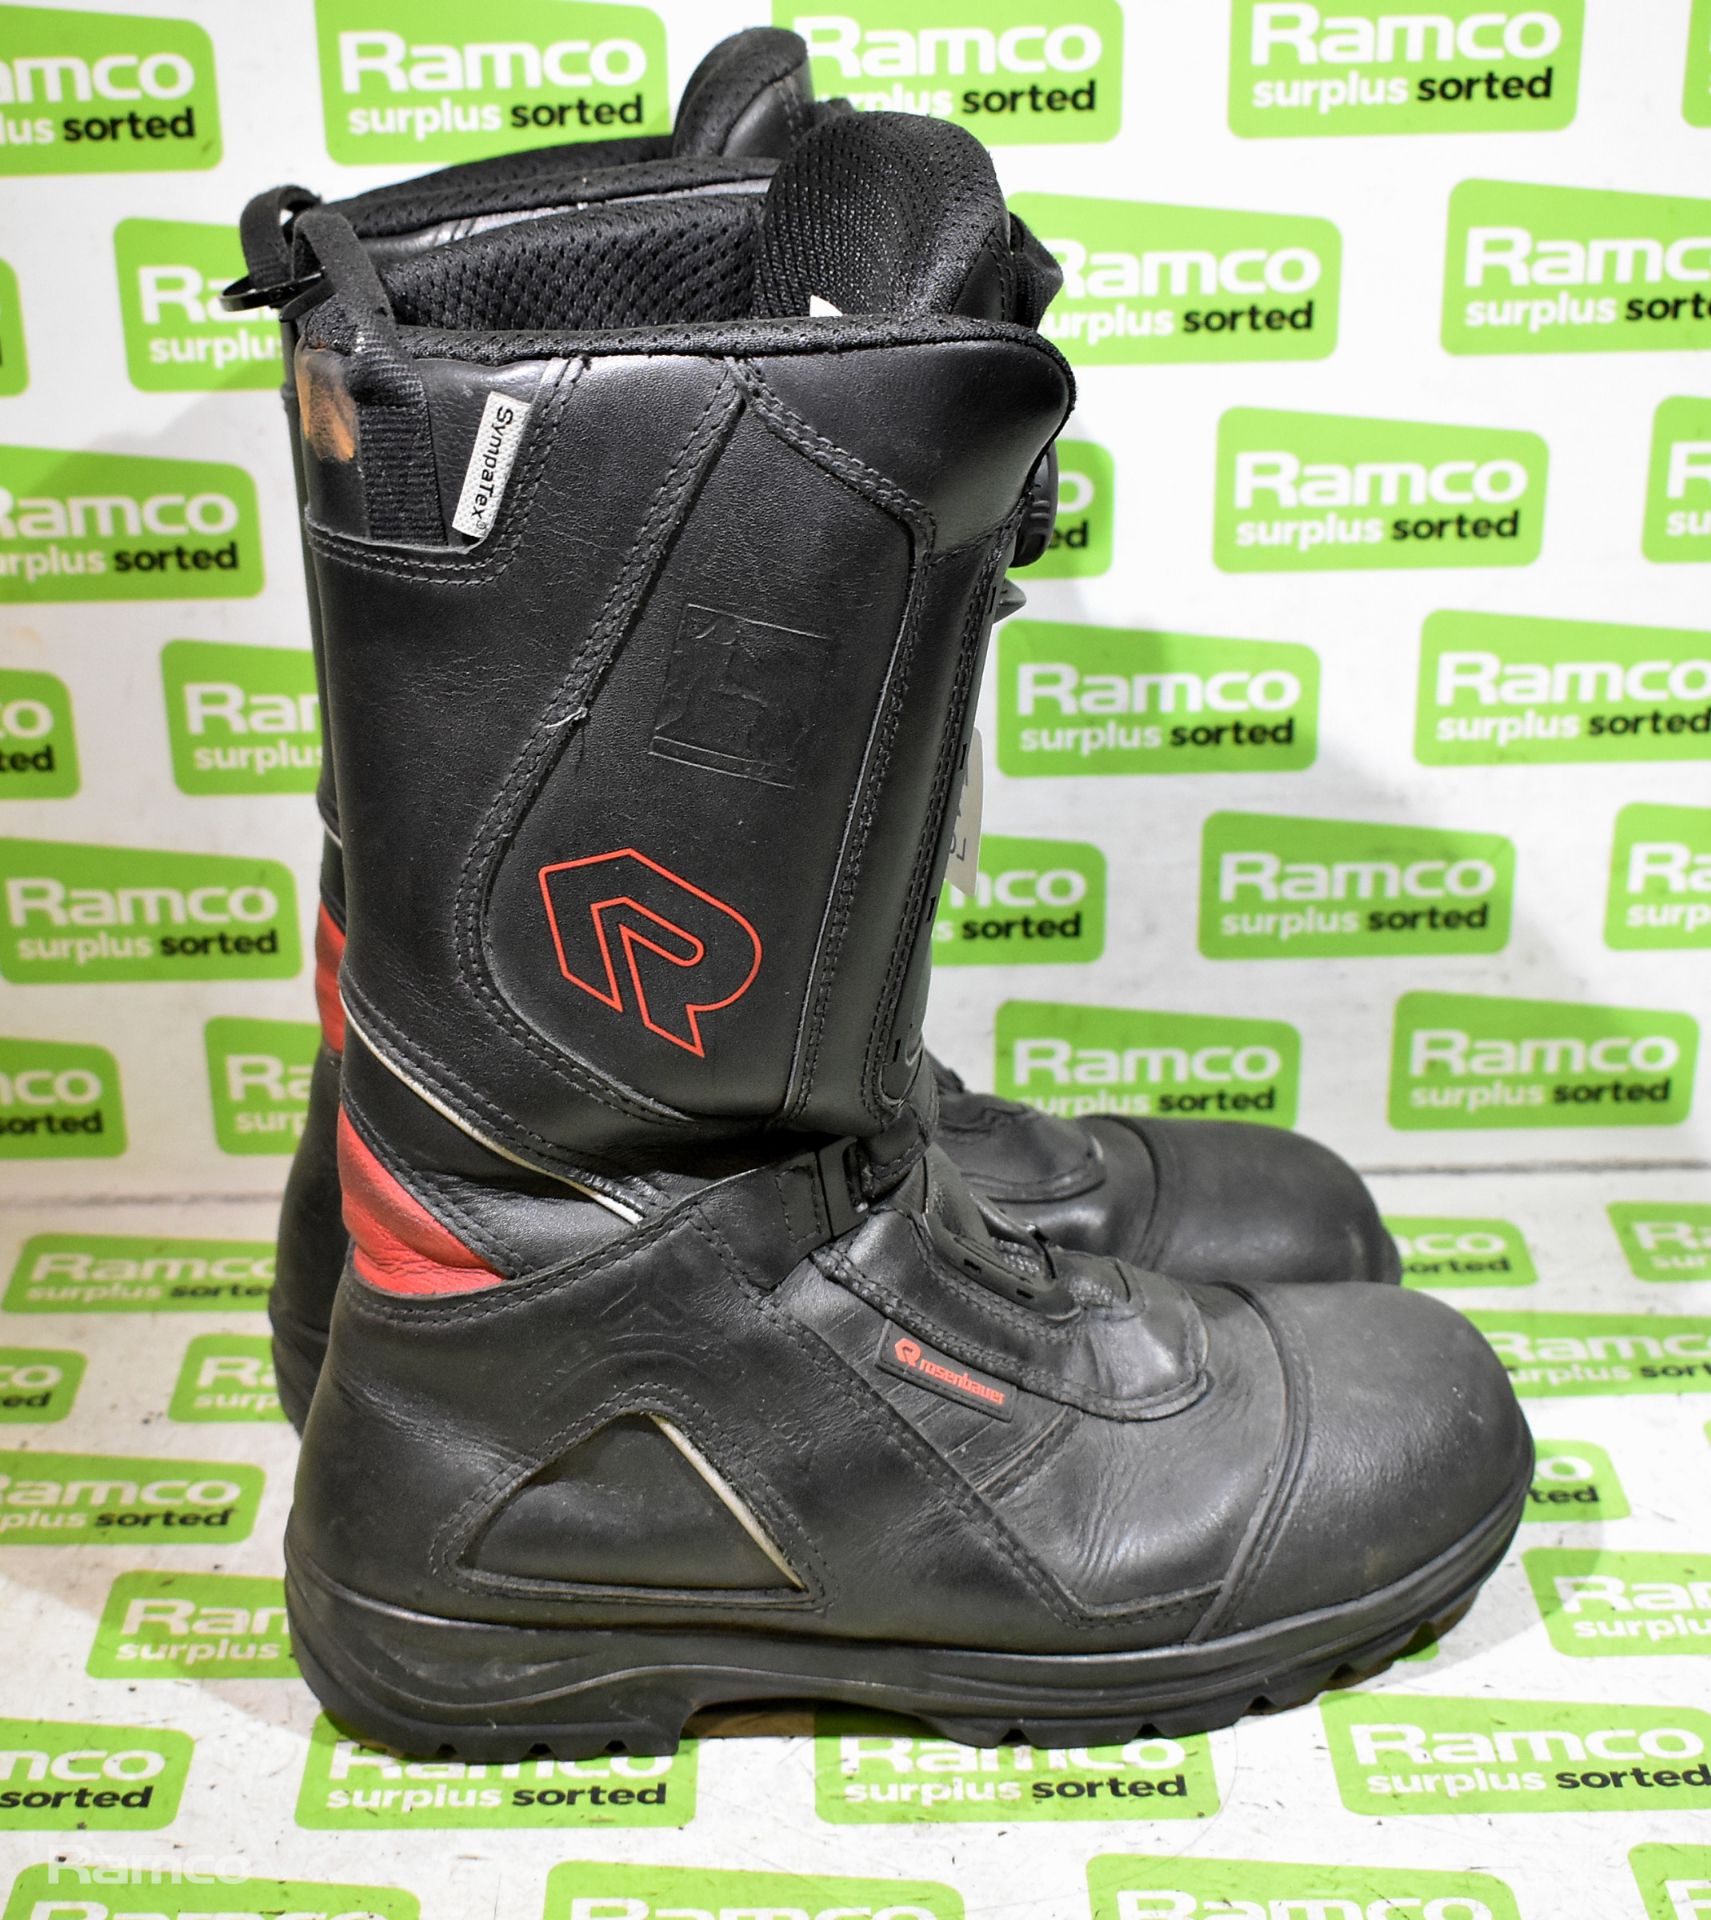 Rosenbauer Sympatex Fire & Heat Resistant Boots Pair - Size: EU 42, UK 8 - Image 2 of 4